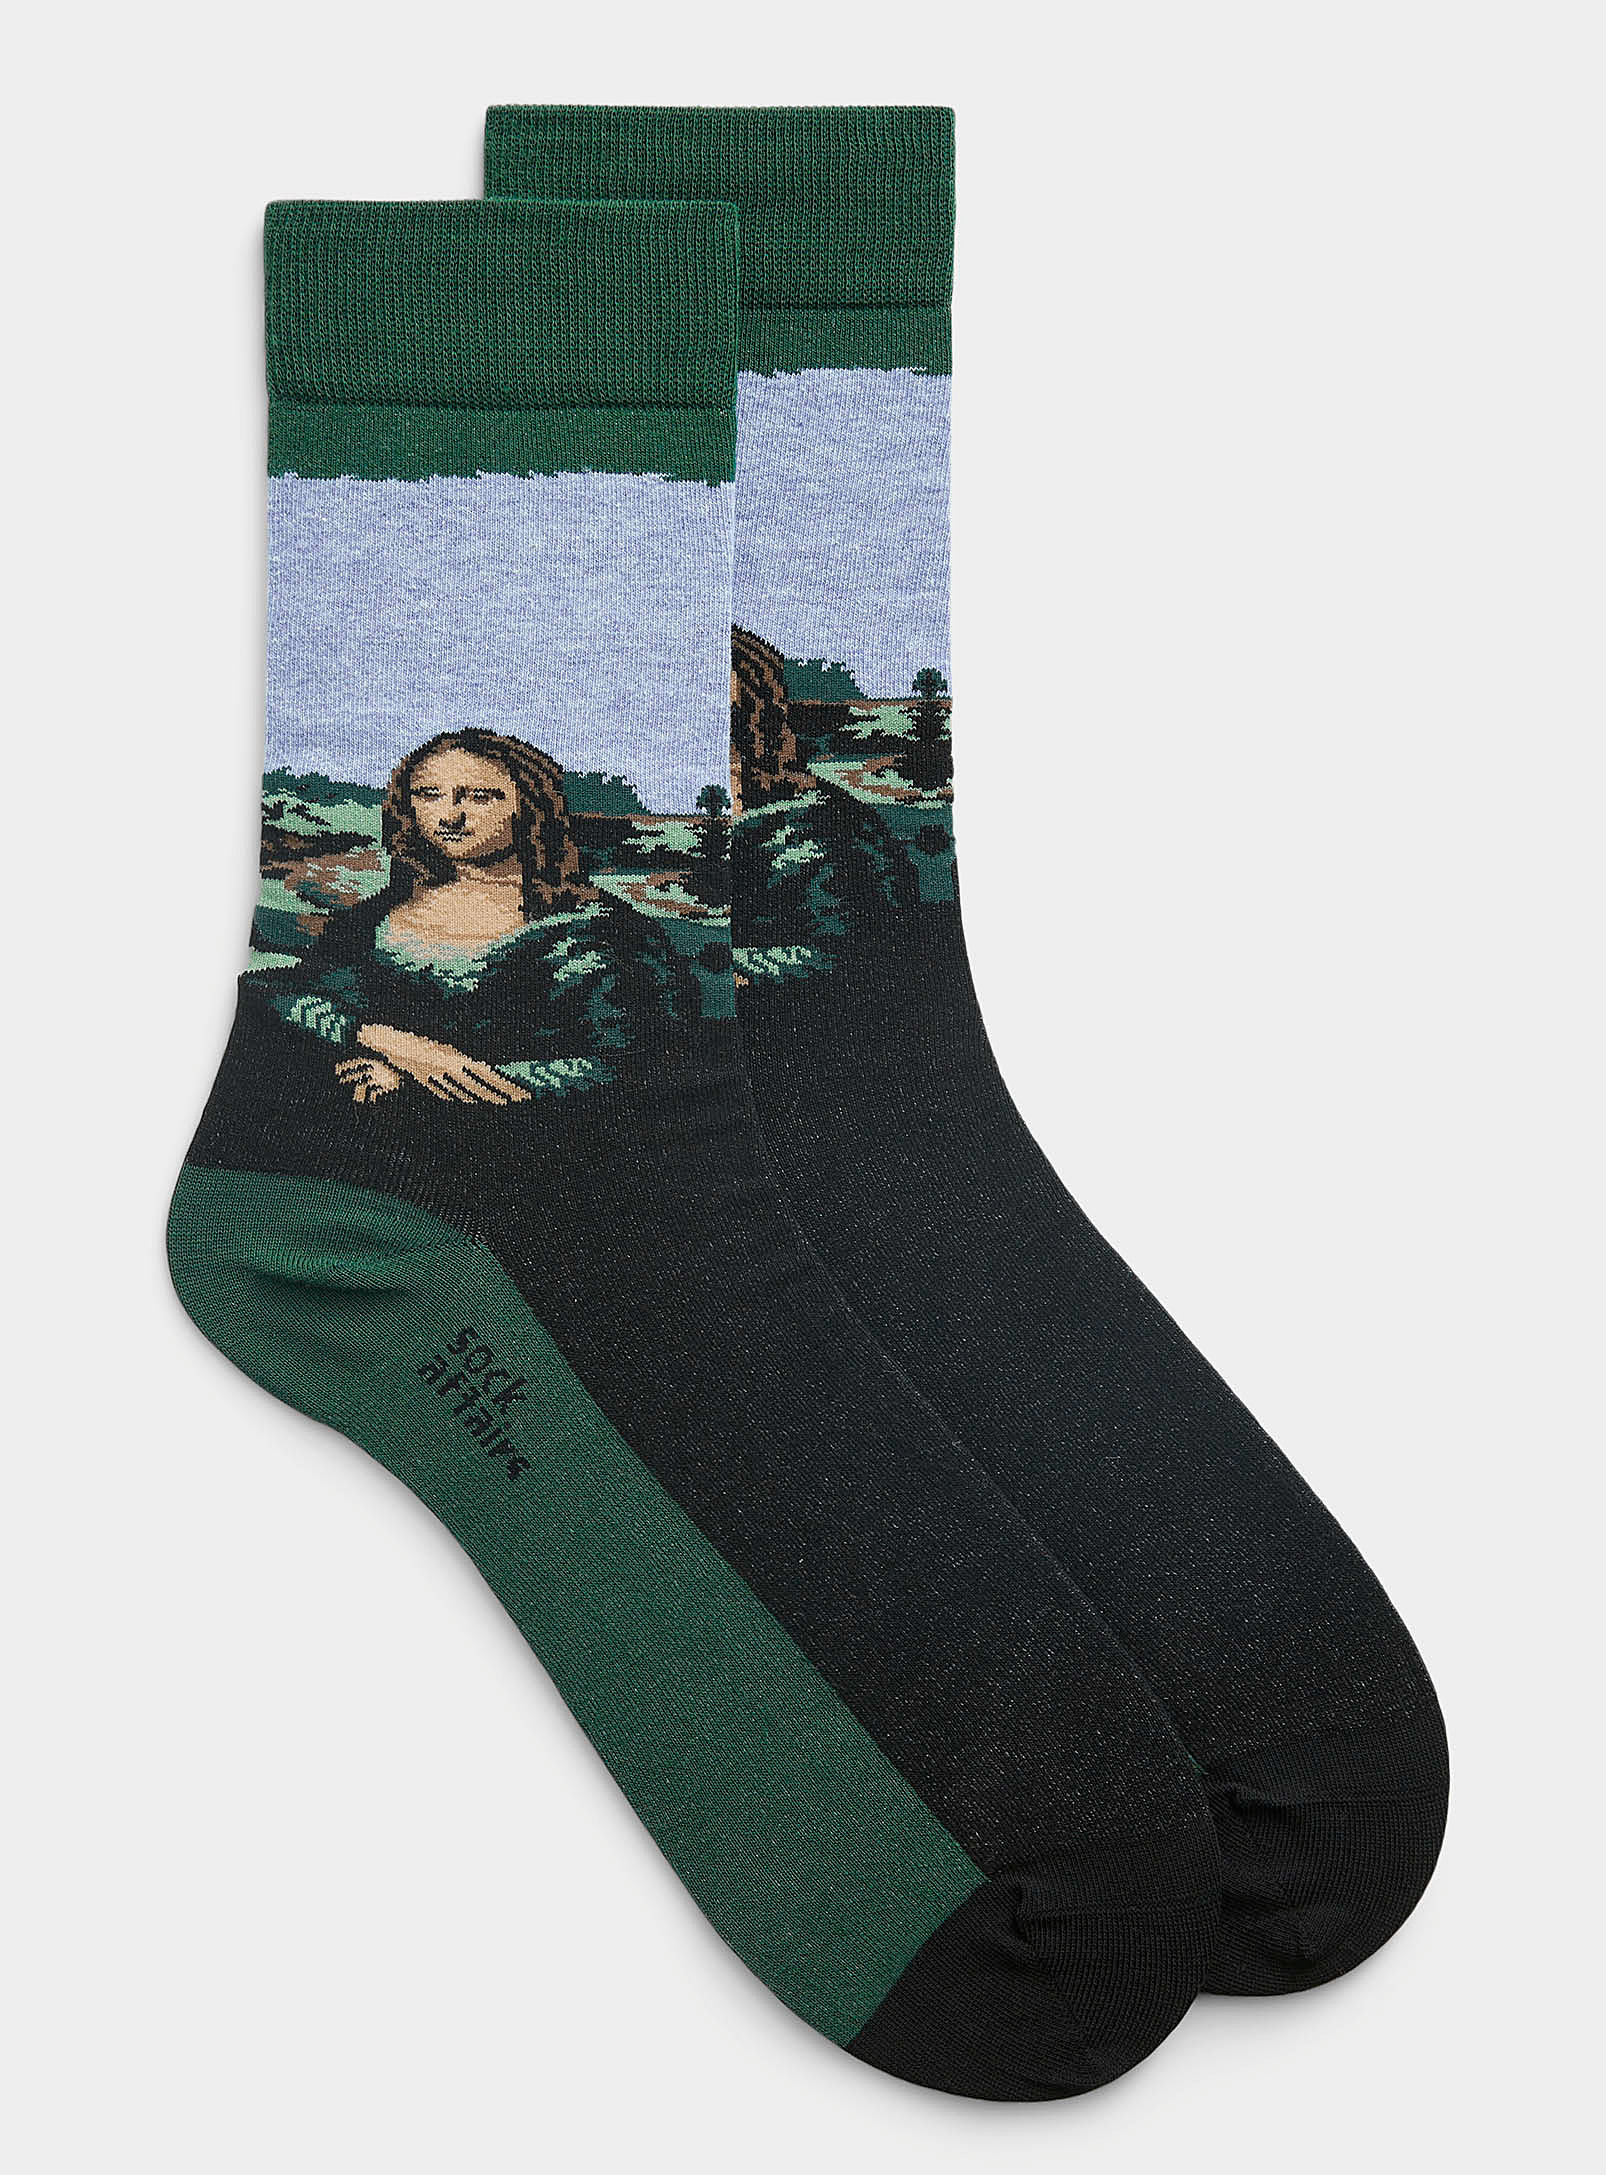 Sock Affairs - Men's Mona Lisa sock